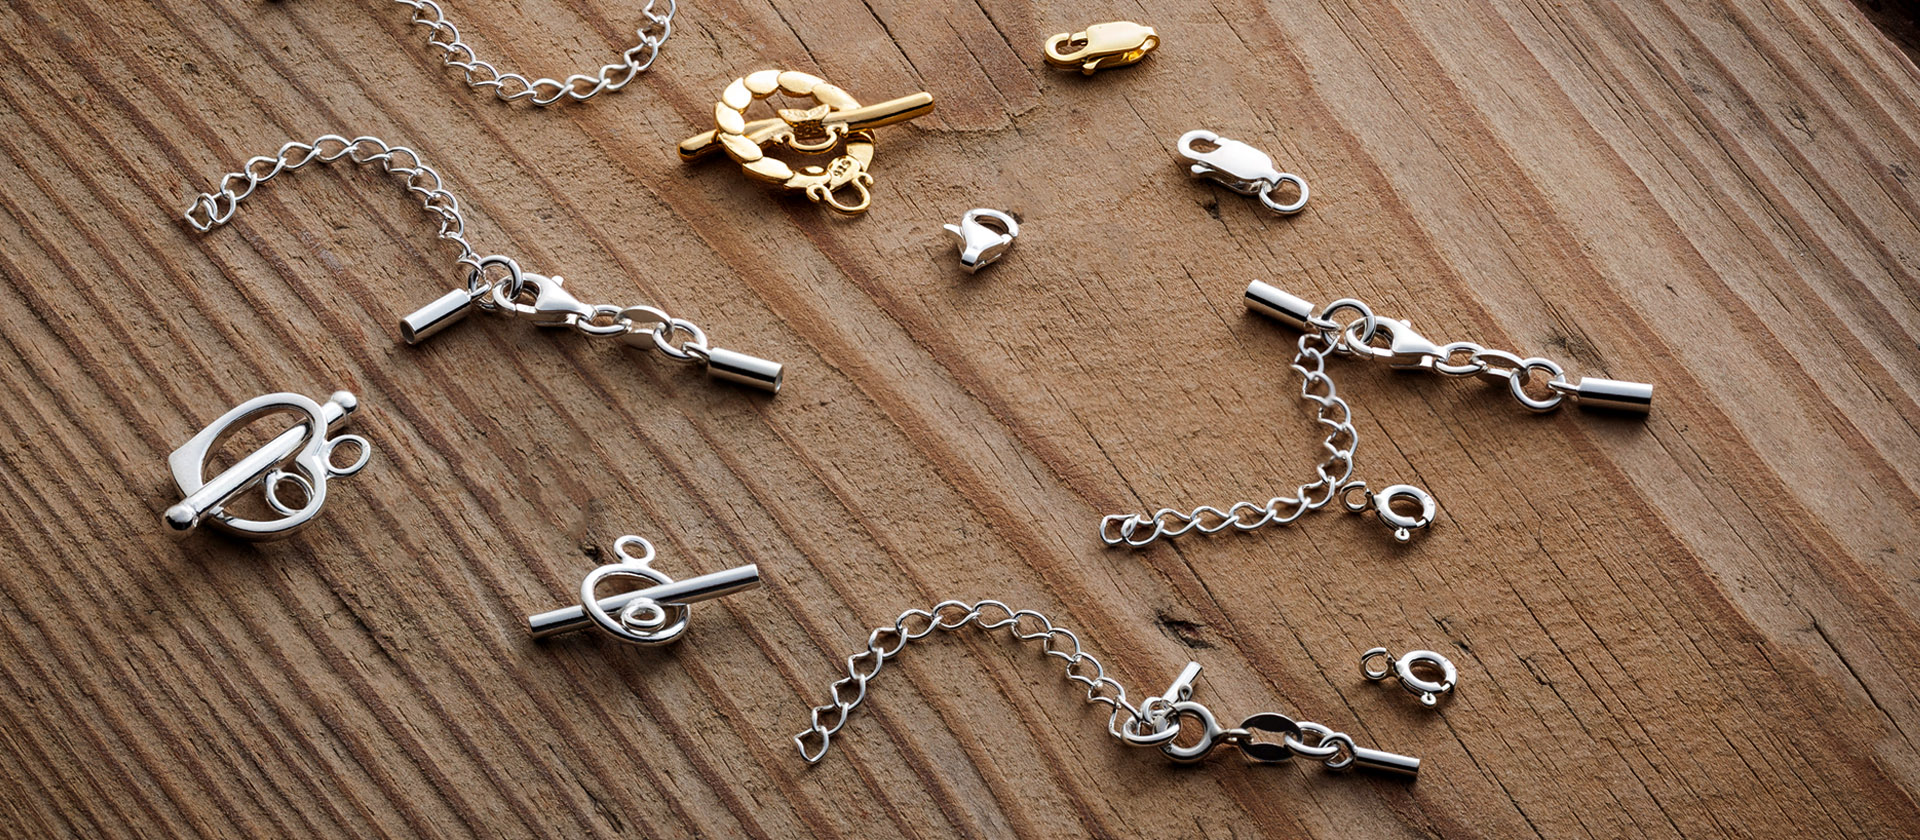 Types of jewelry clasps